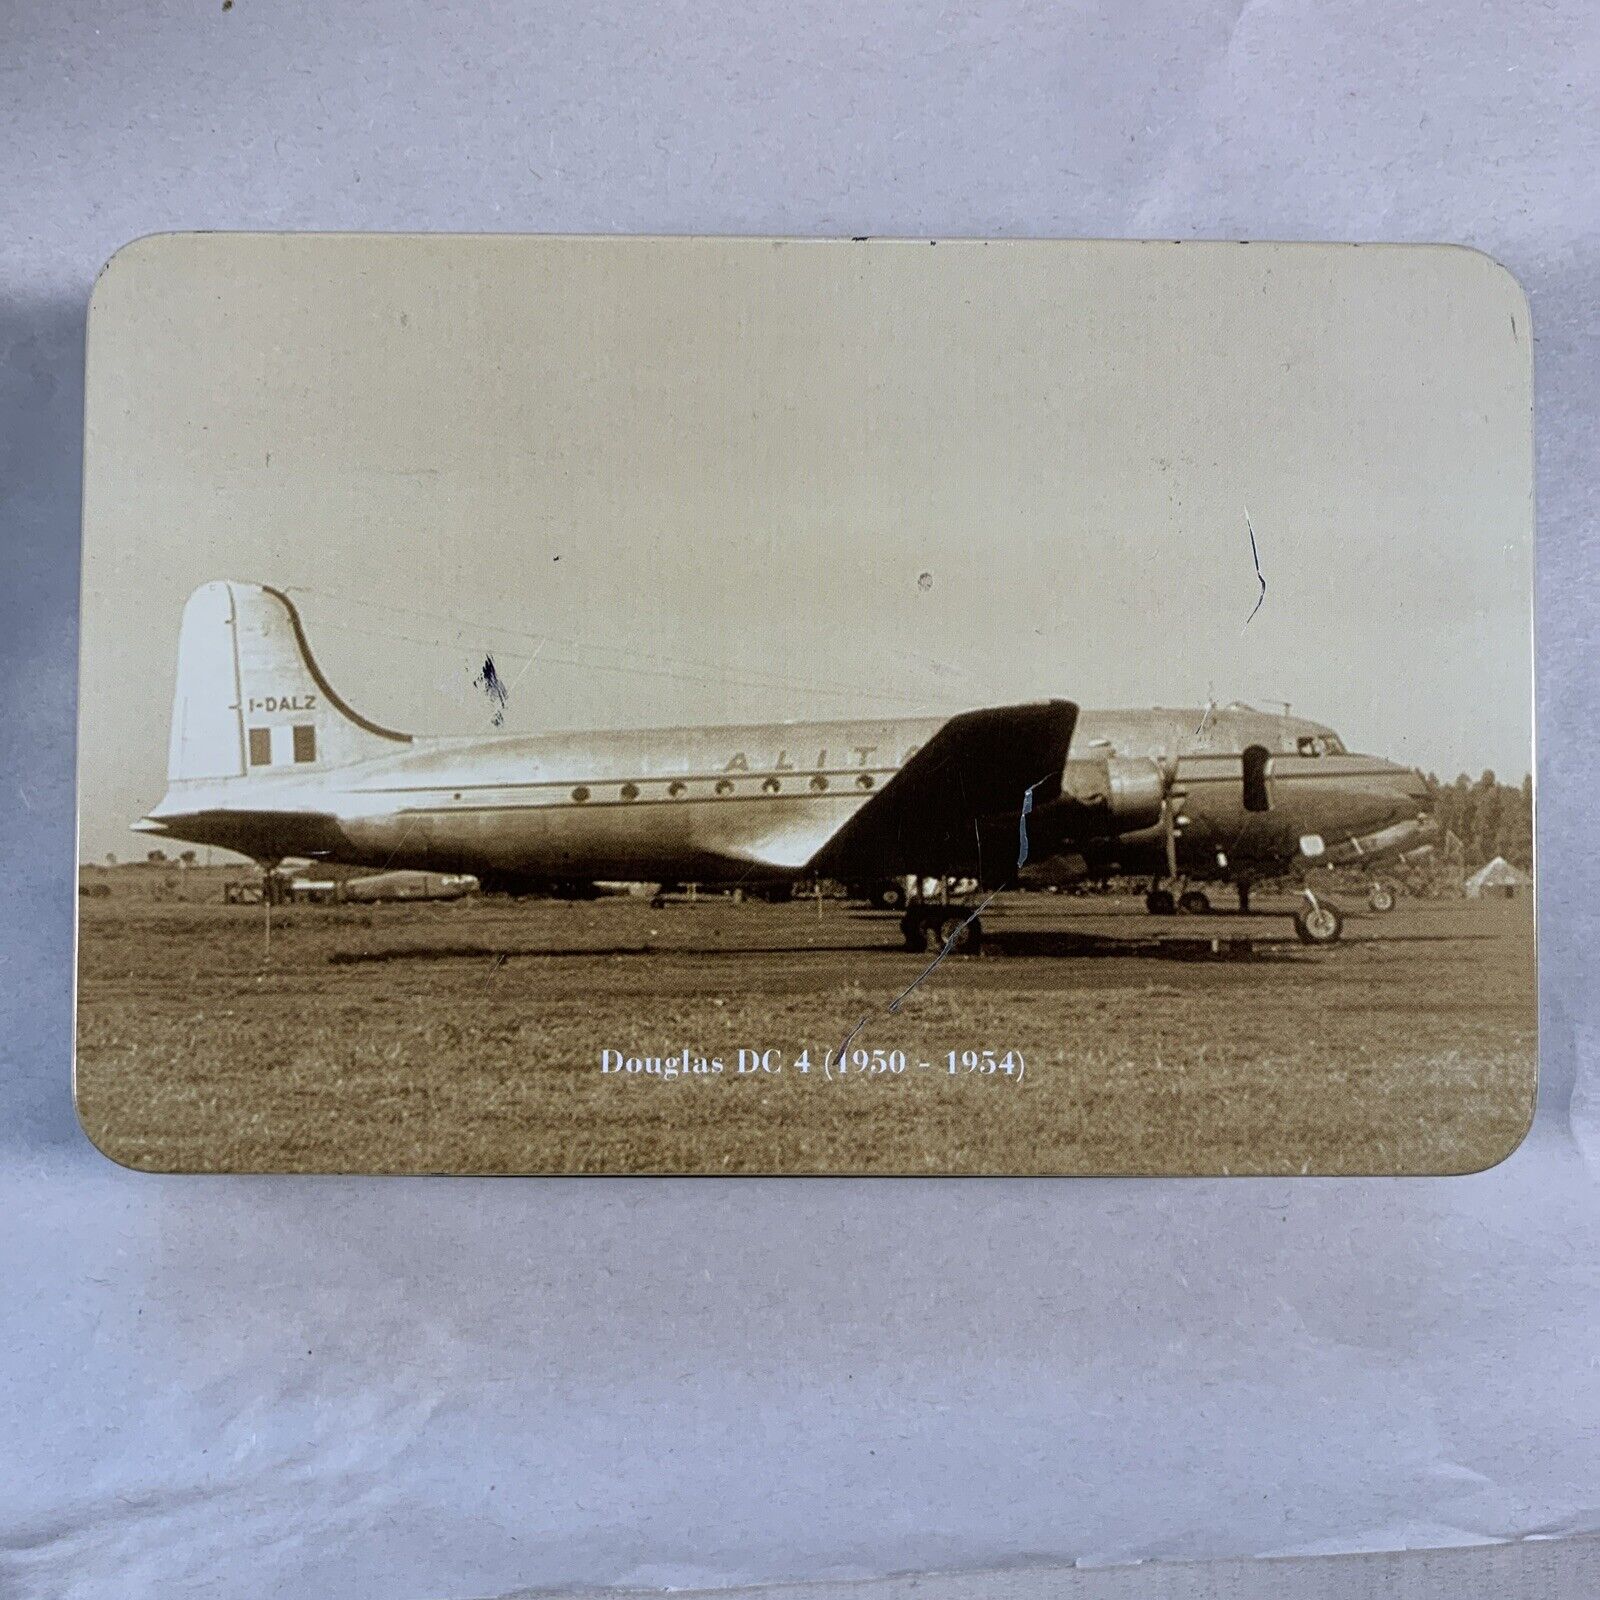 Vintage Alitalia Douglas DC 4 (1950-1954) Tin Box